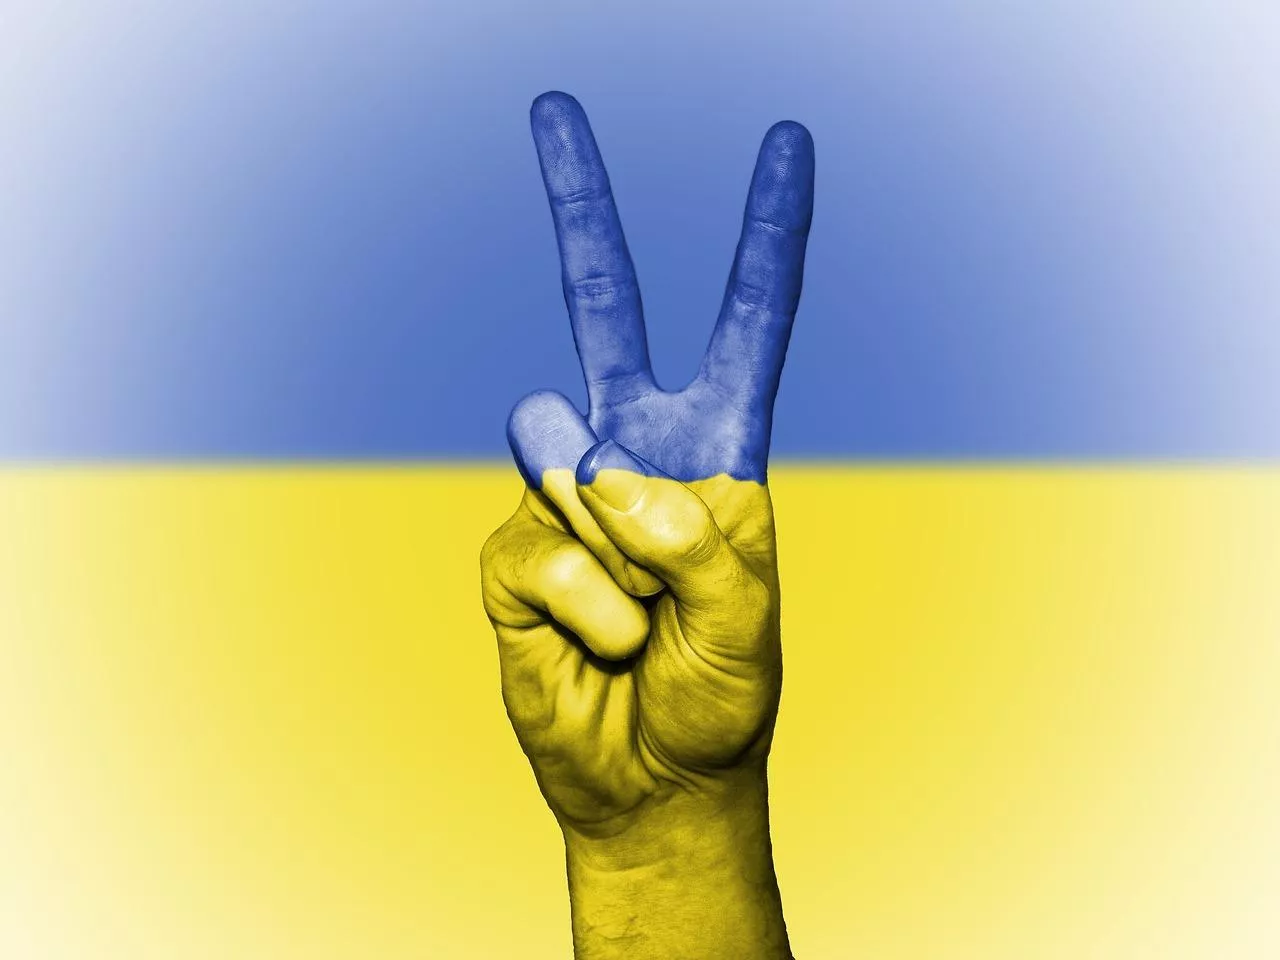 ukraine (ukraine)